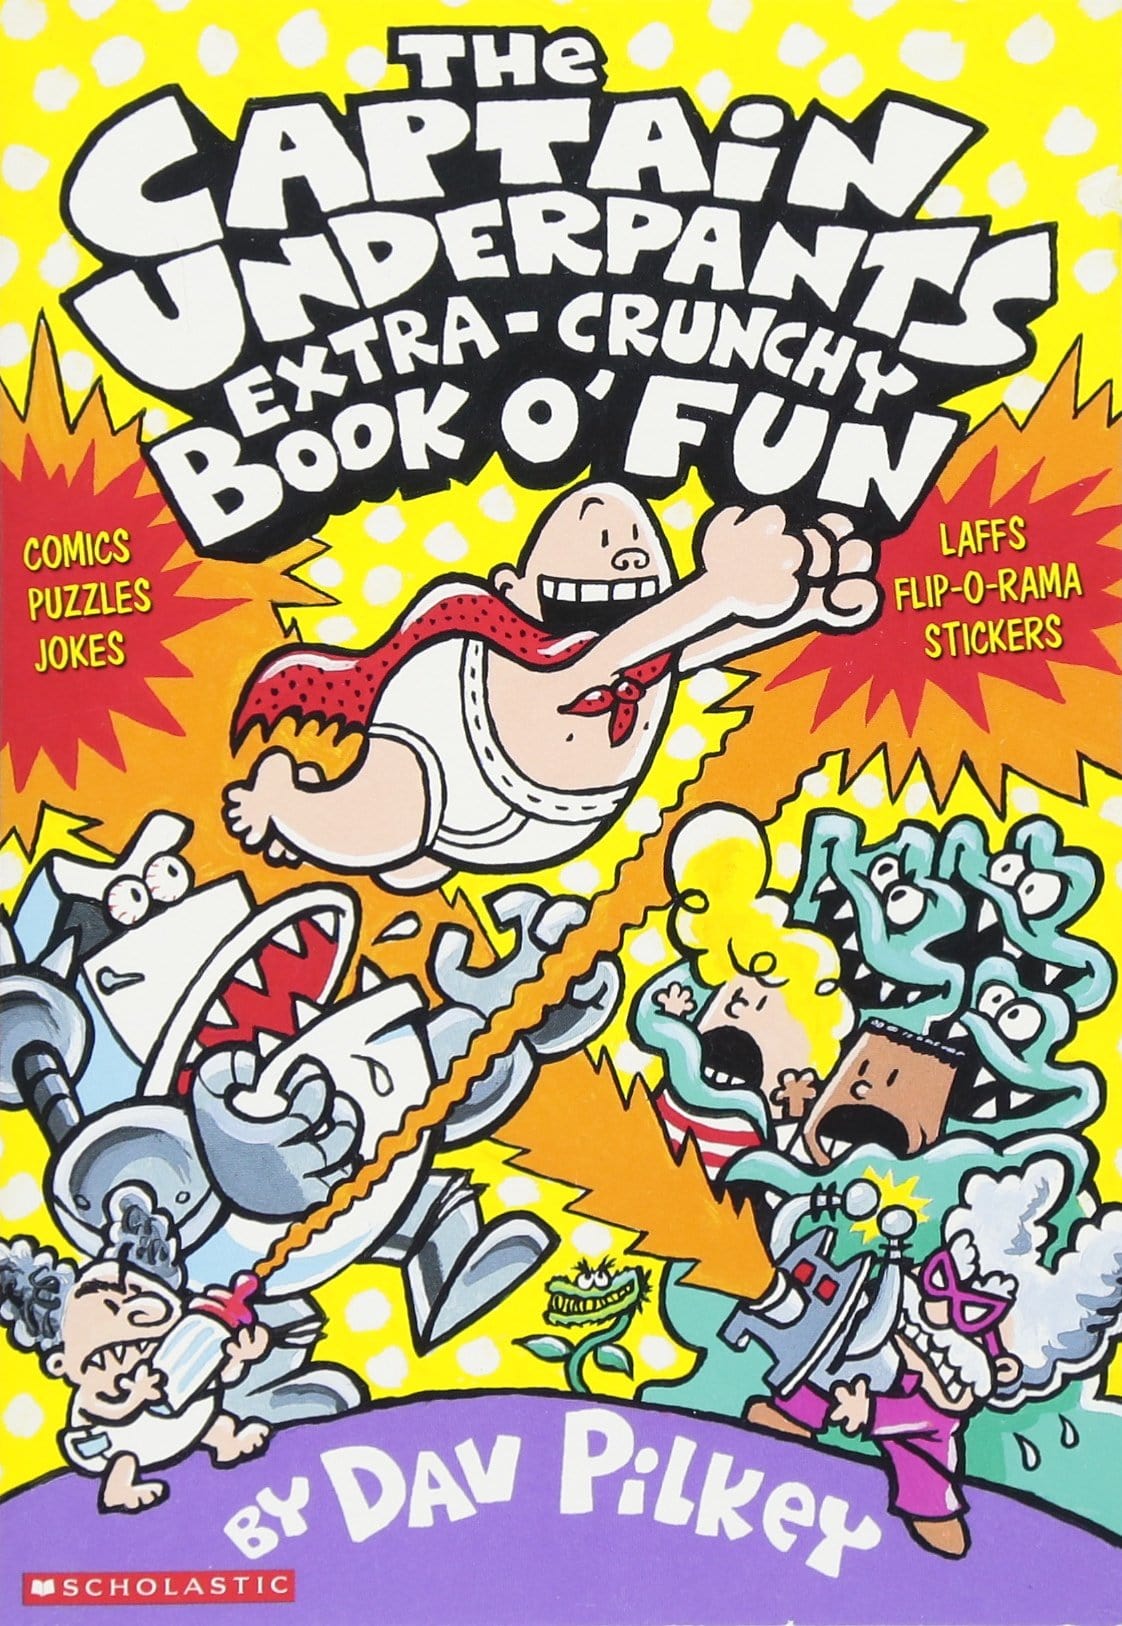 Captain Underpants: Extra-Crunchy Book o' Fun TP - Third Eye